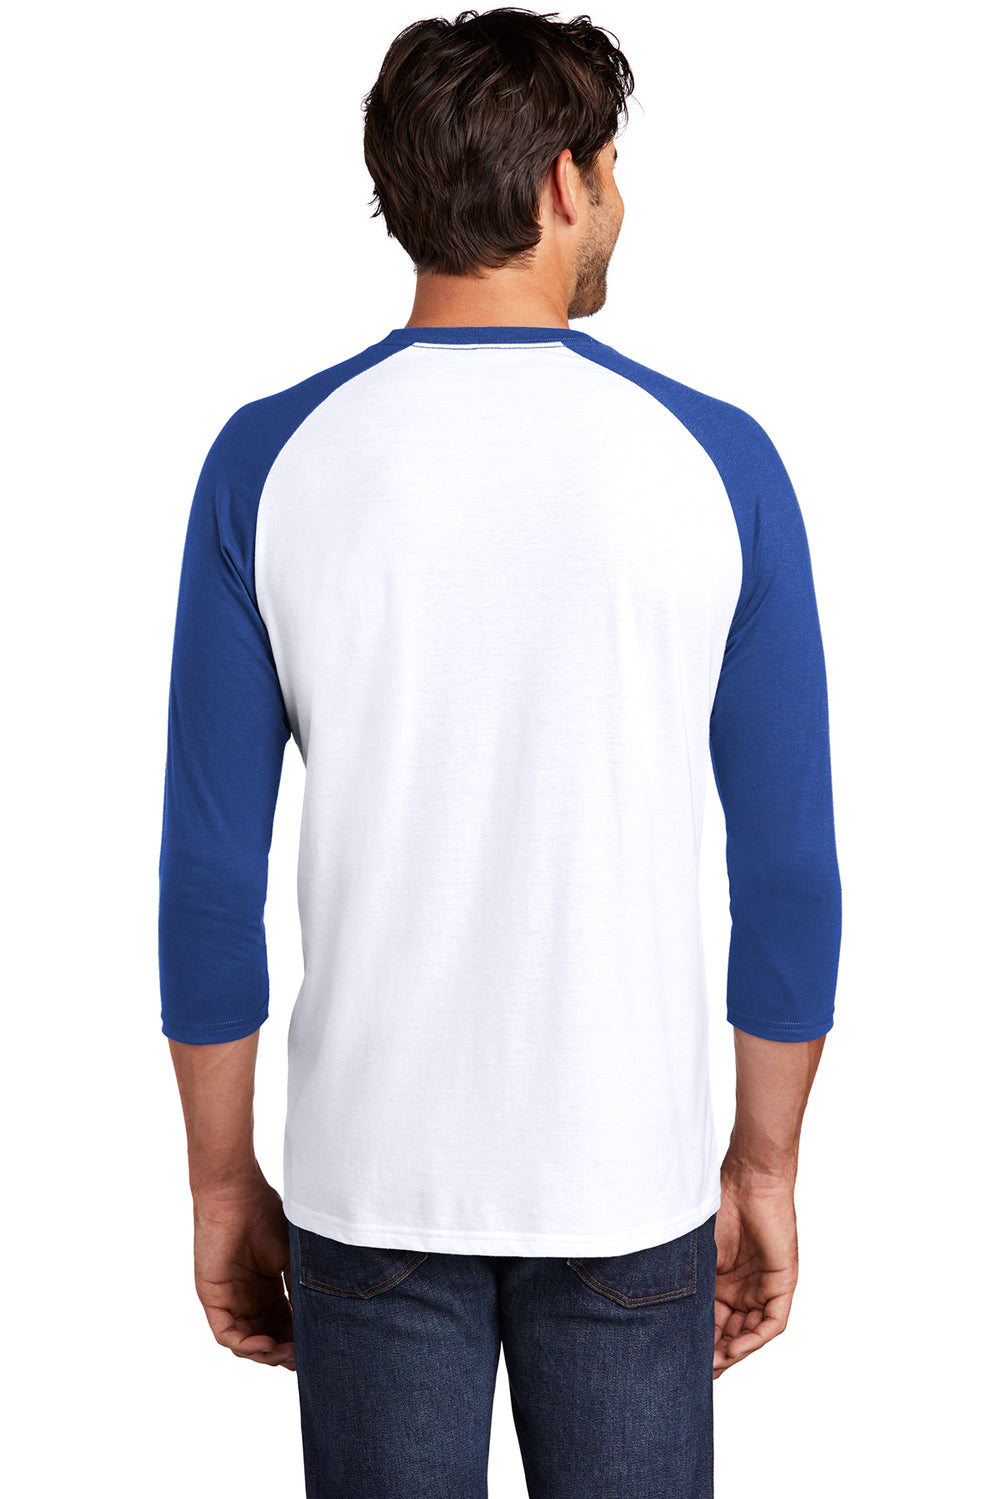 District DM136 Mens Perfect Tri 3/4 Sleeve Crewneck T-Shirt White/Deep Royal Blue Back